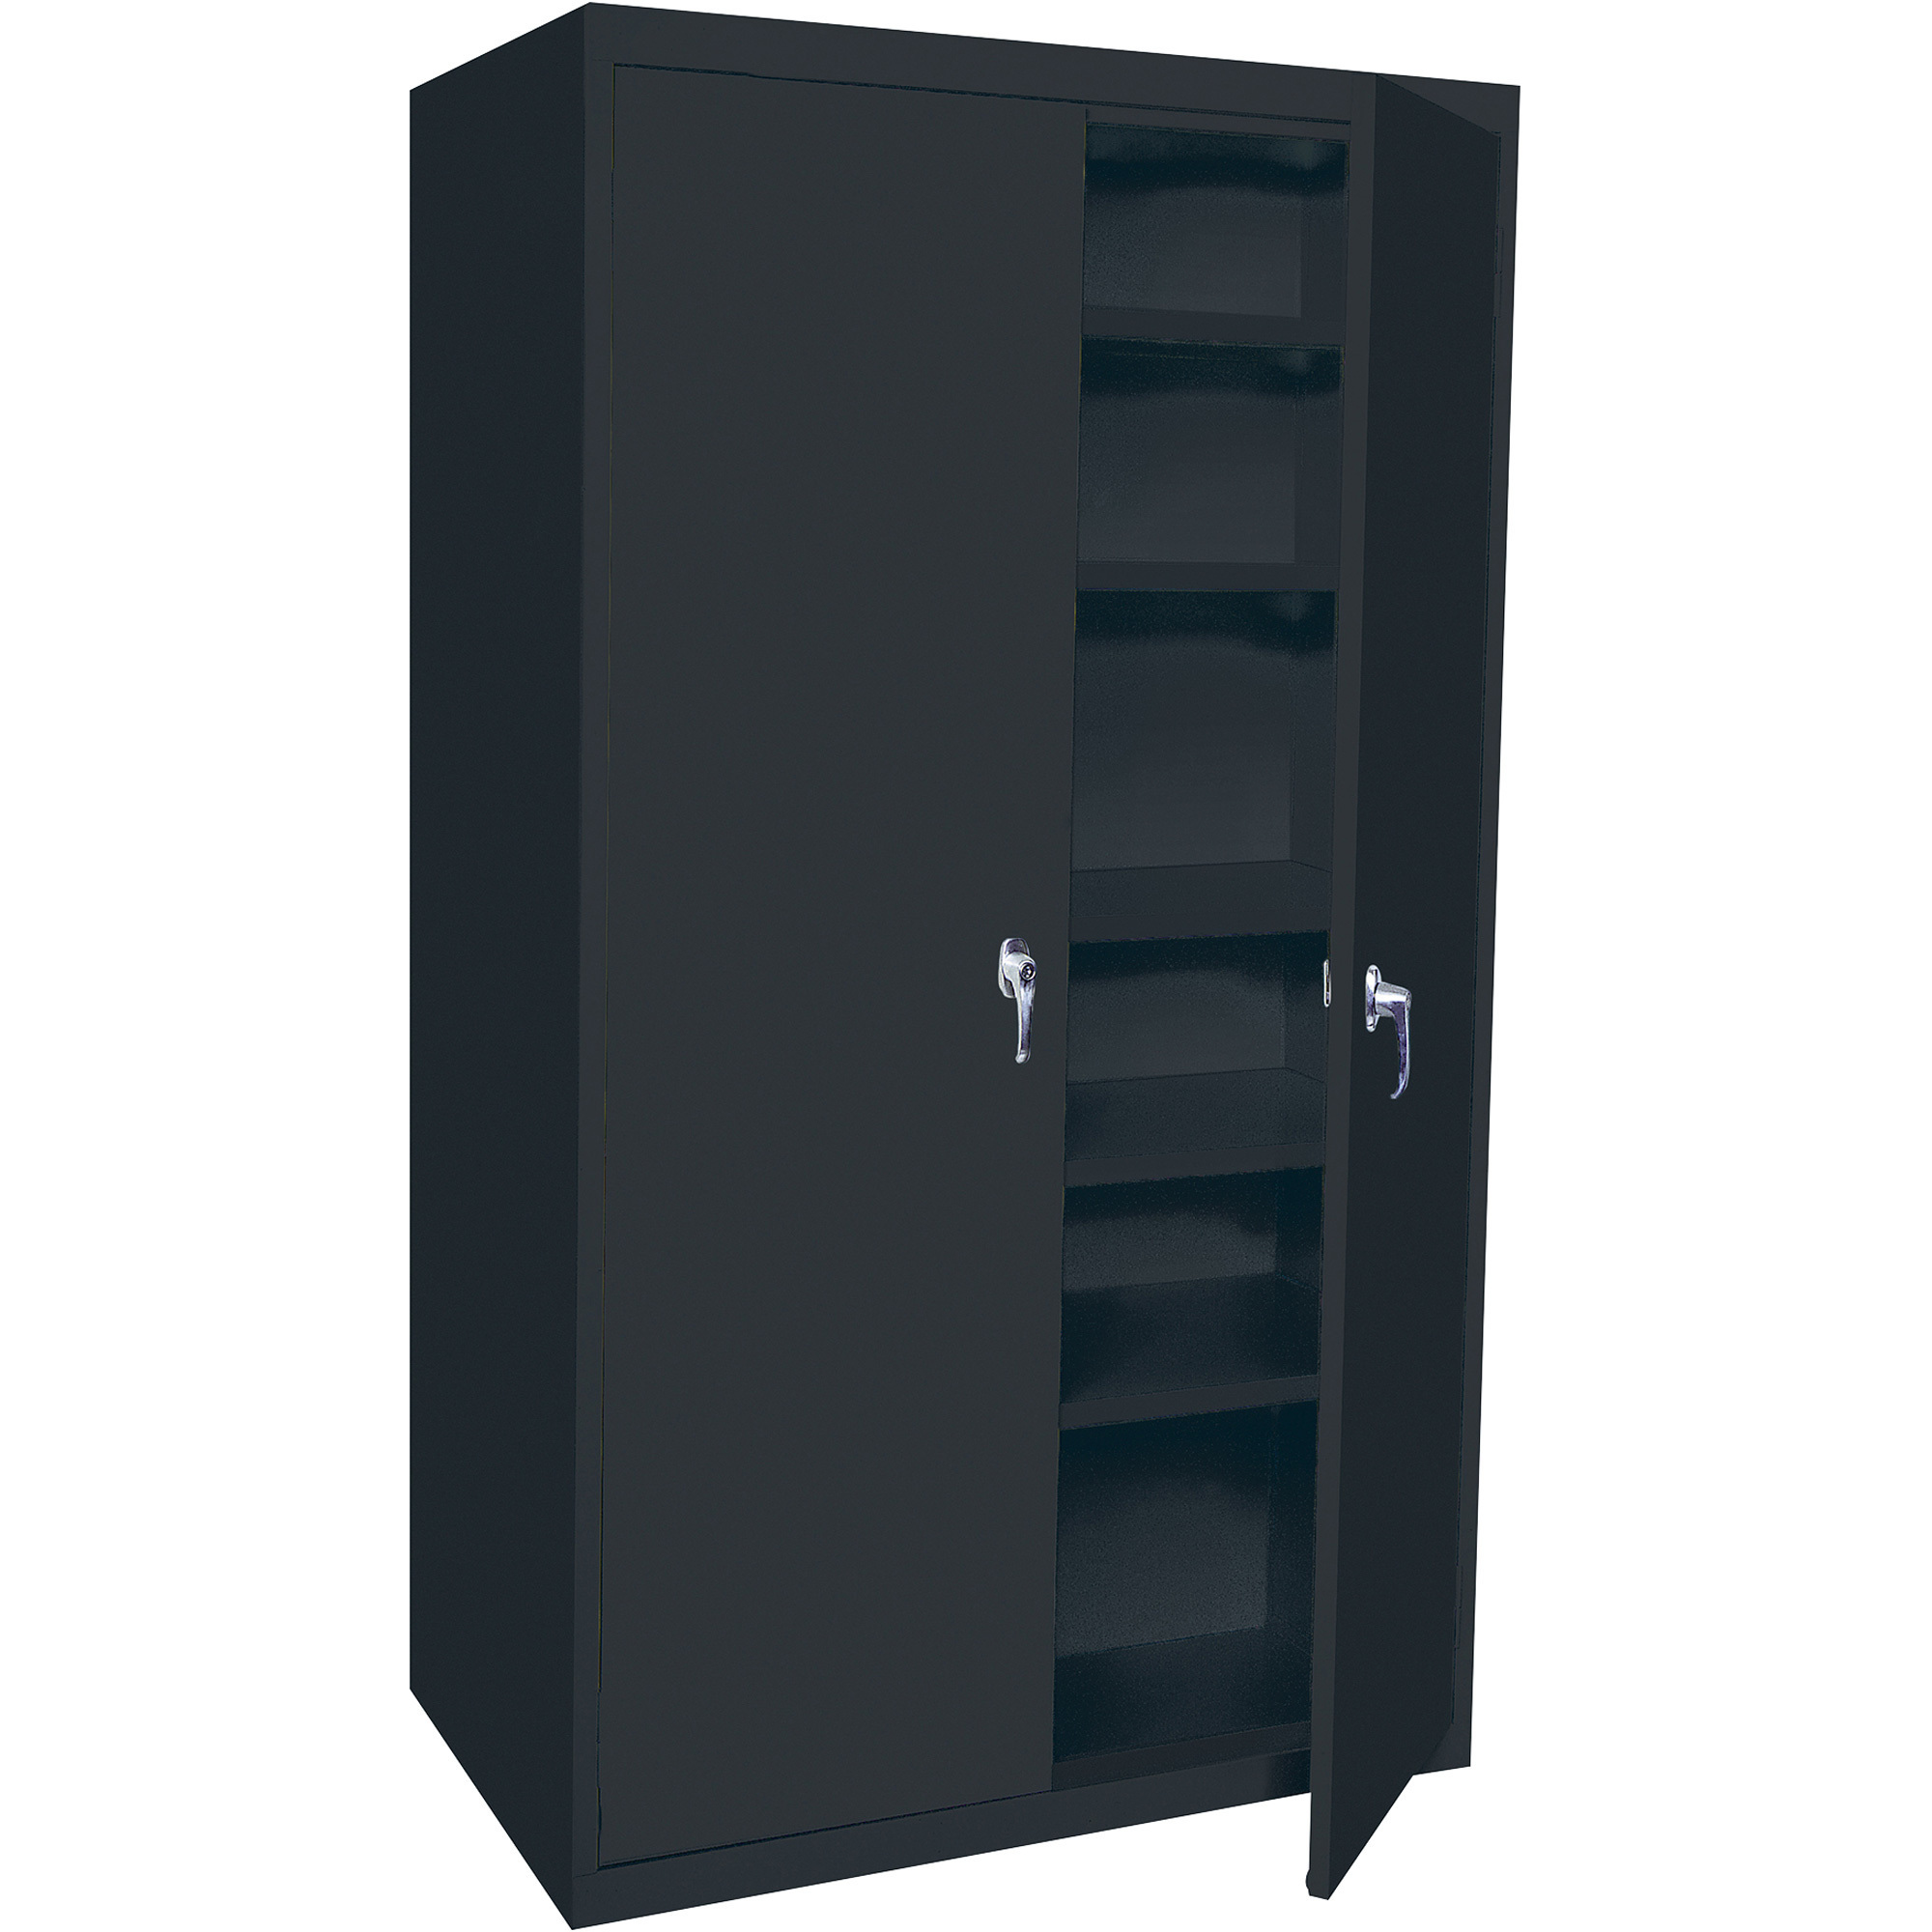 Storage Cabinet — Black, 5 Fixed Shelves, 36Inch W x 18Inch D x 78Inch H, Model - Steel Cabinets USA 5-7818-FS-B